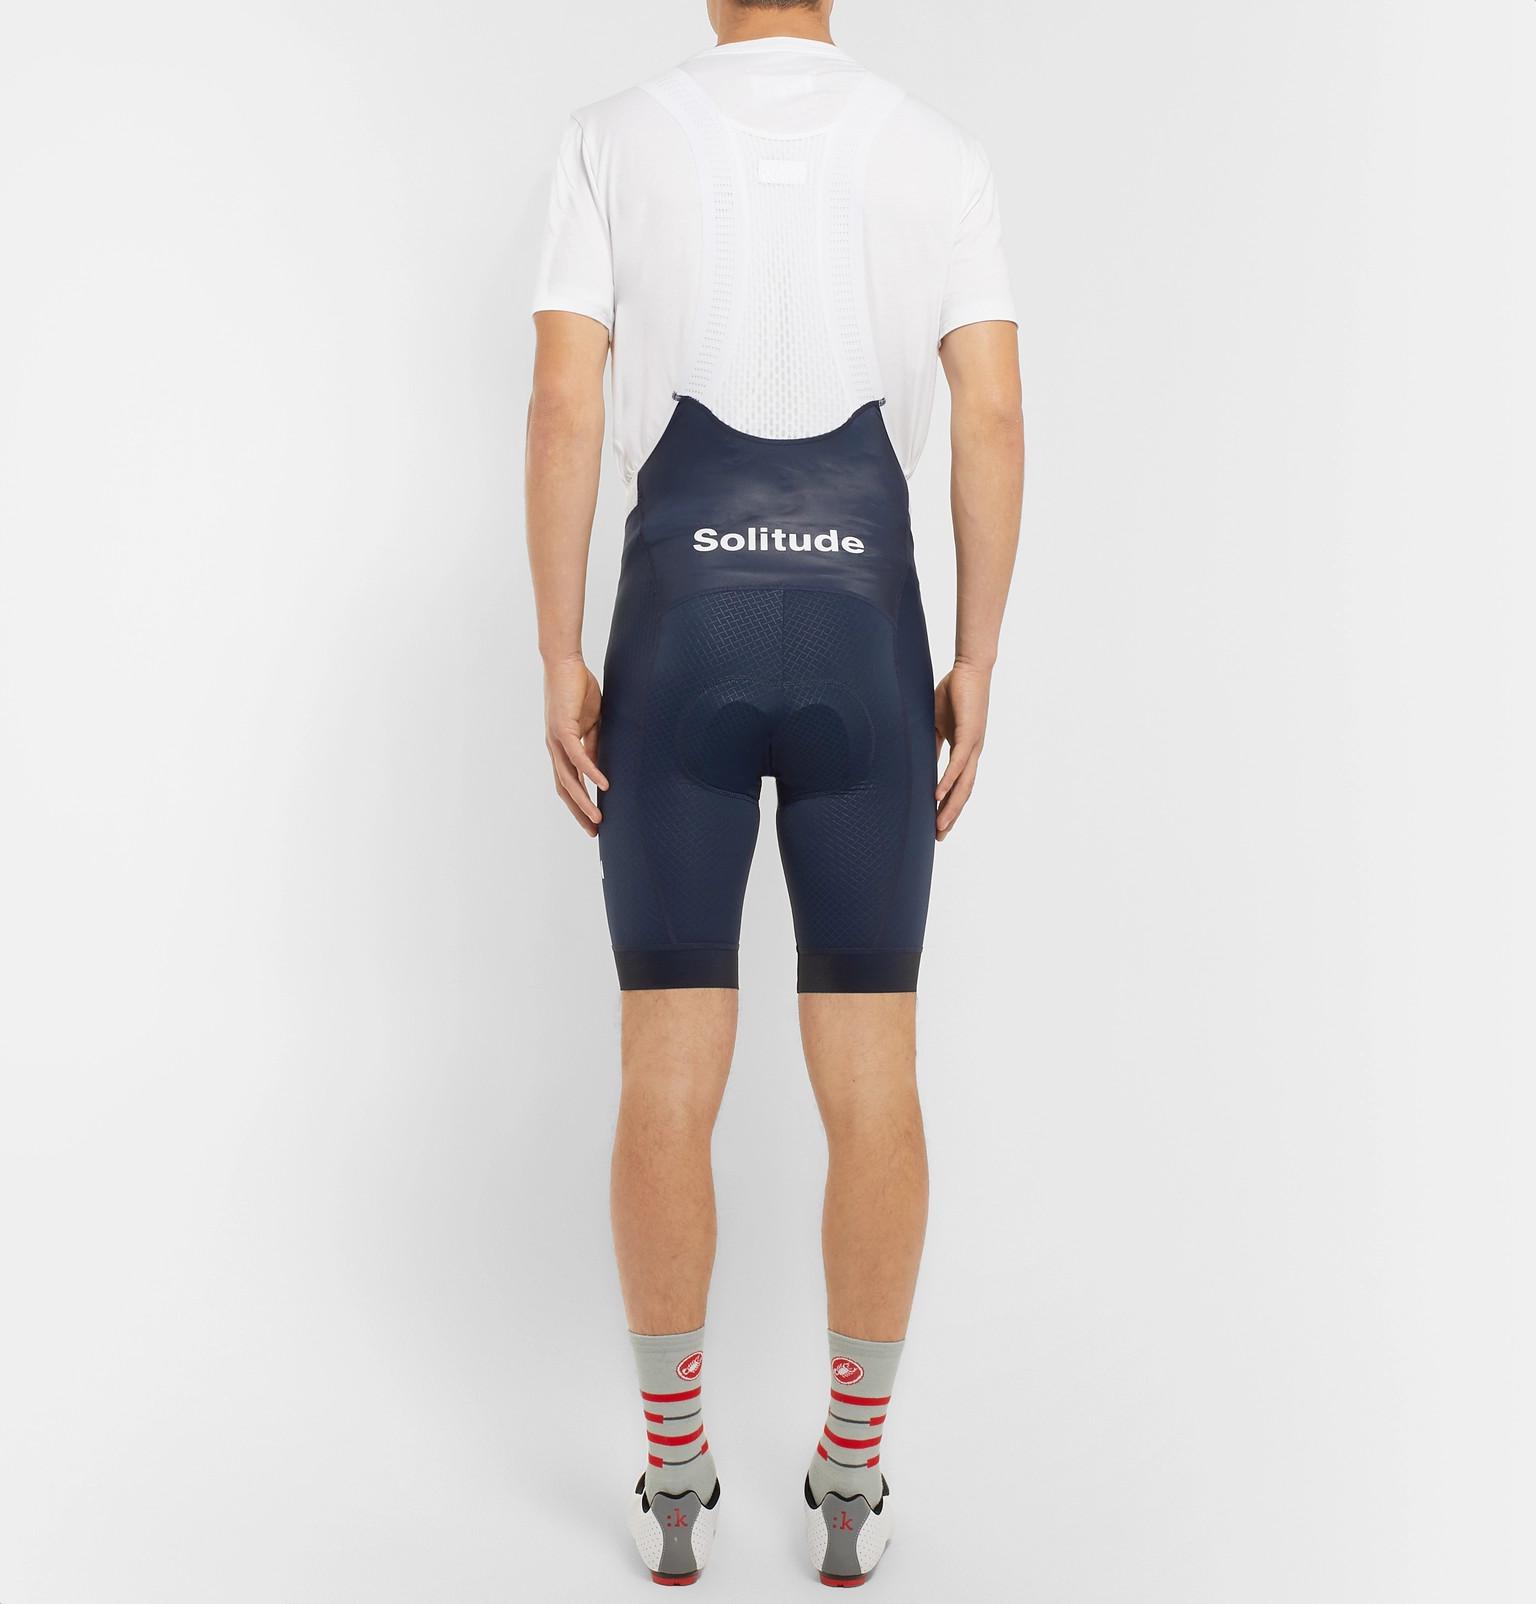 Pas Normal Studios Solitude Cycling Bib Shorts in Blue for Men